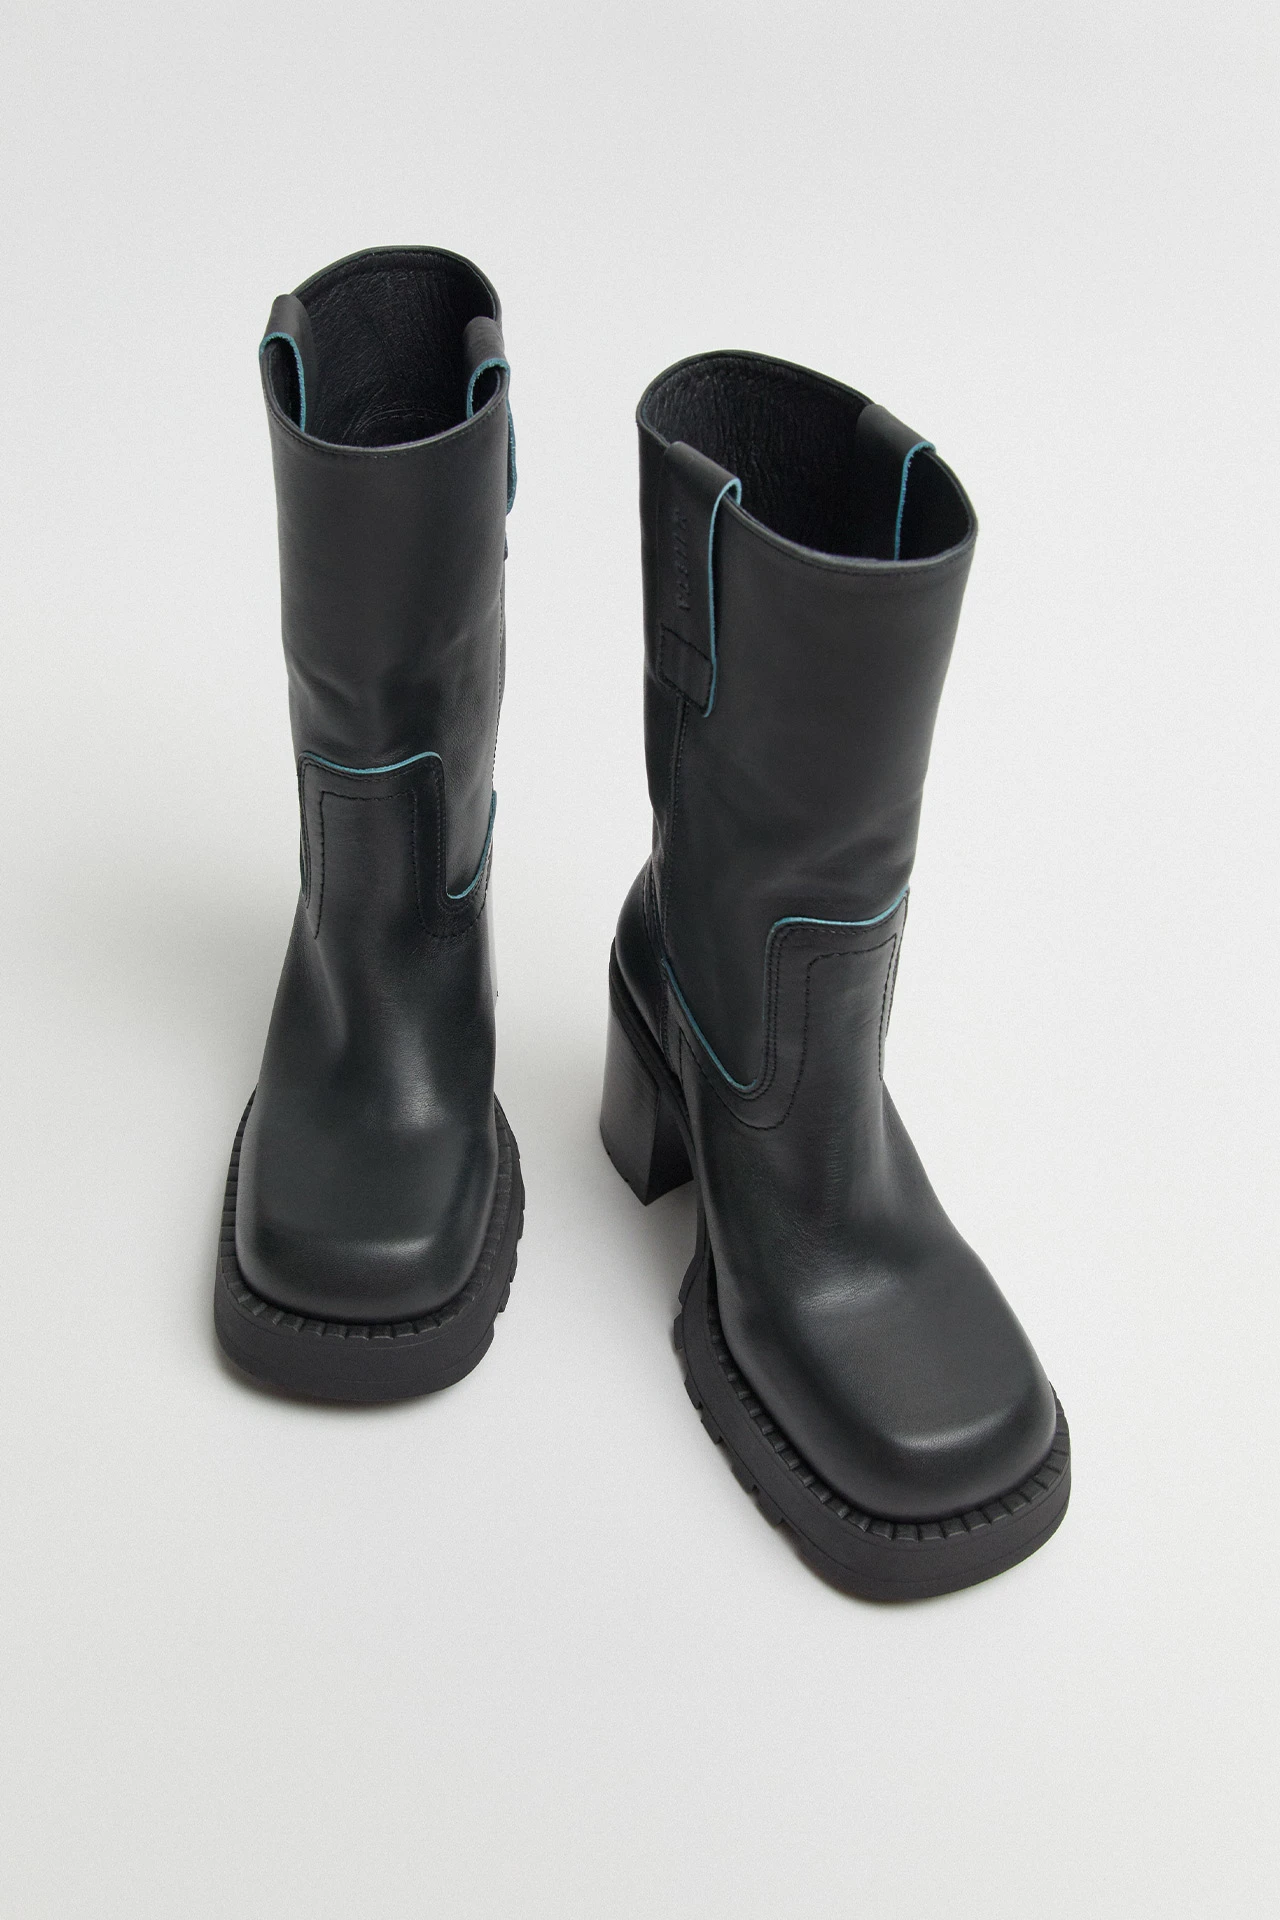 E8-daiane-blue-boots-04